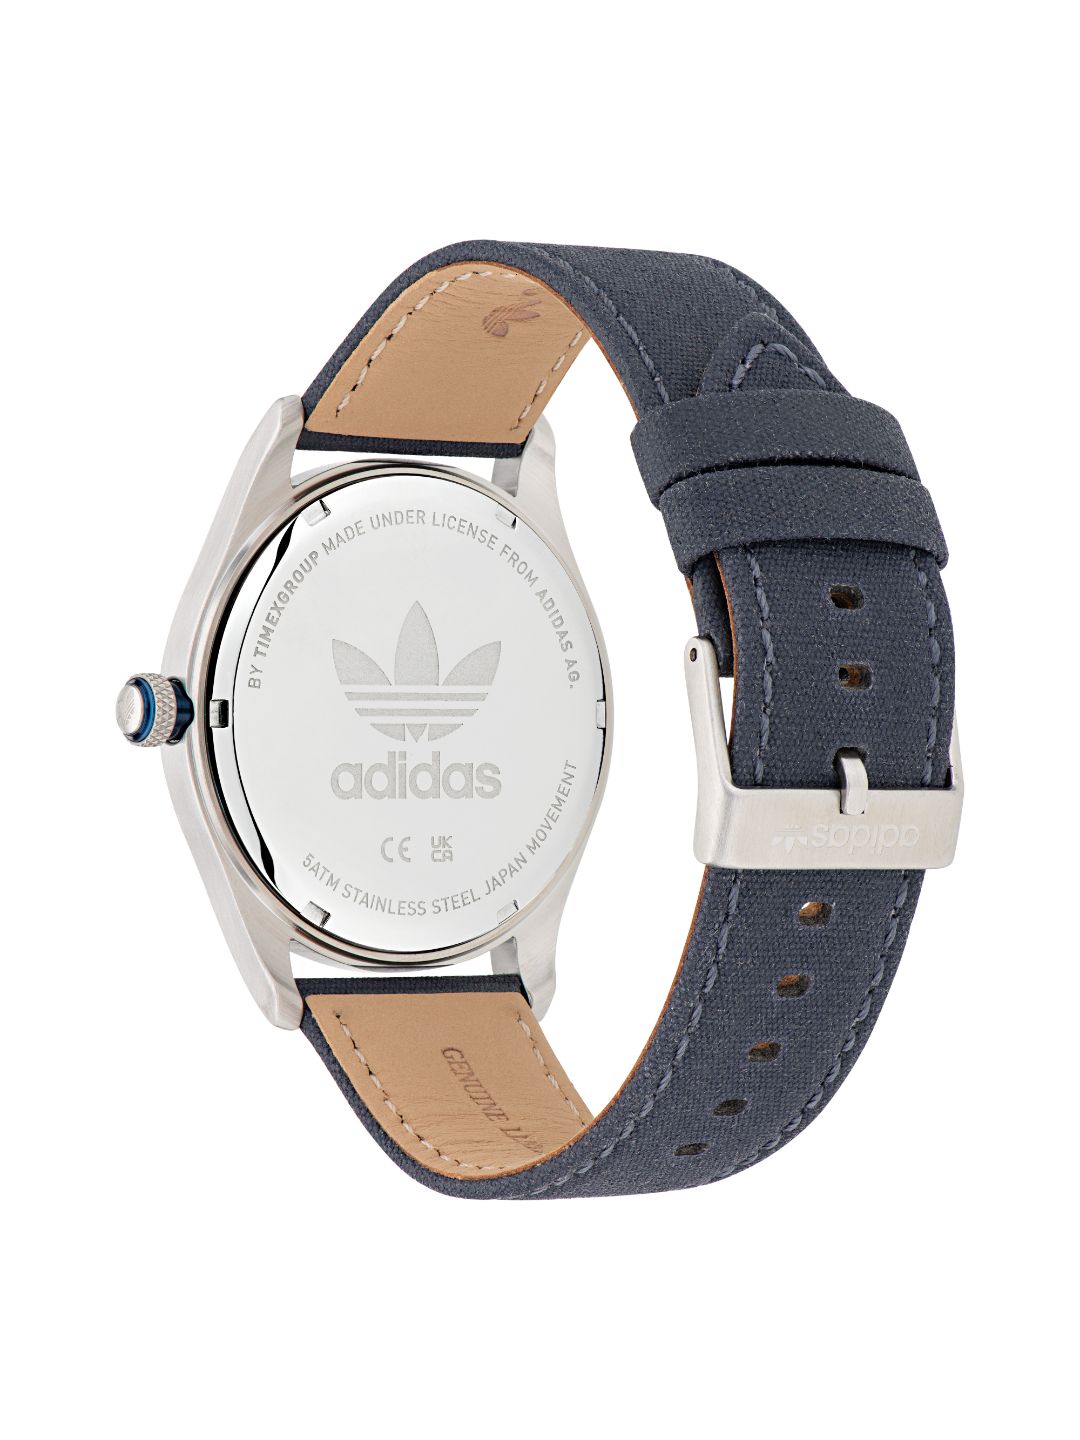 Adidas Originals Blue Dial Unisex Watch - AOSY23038